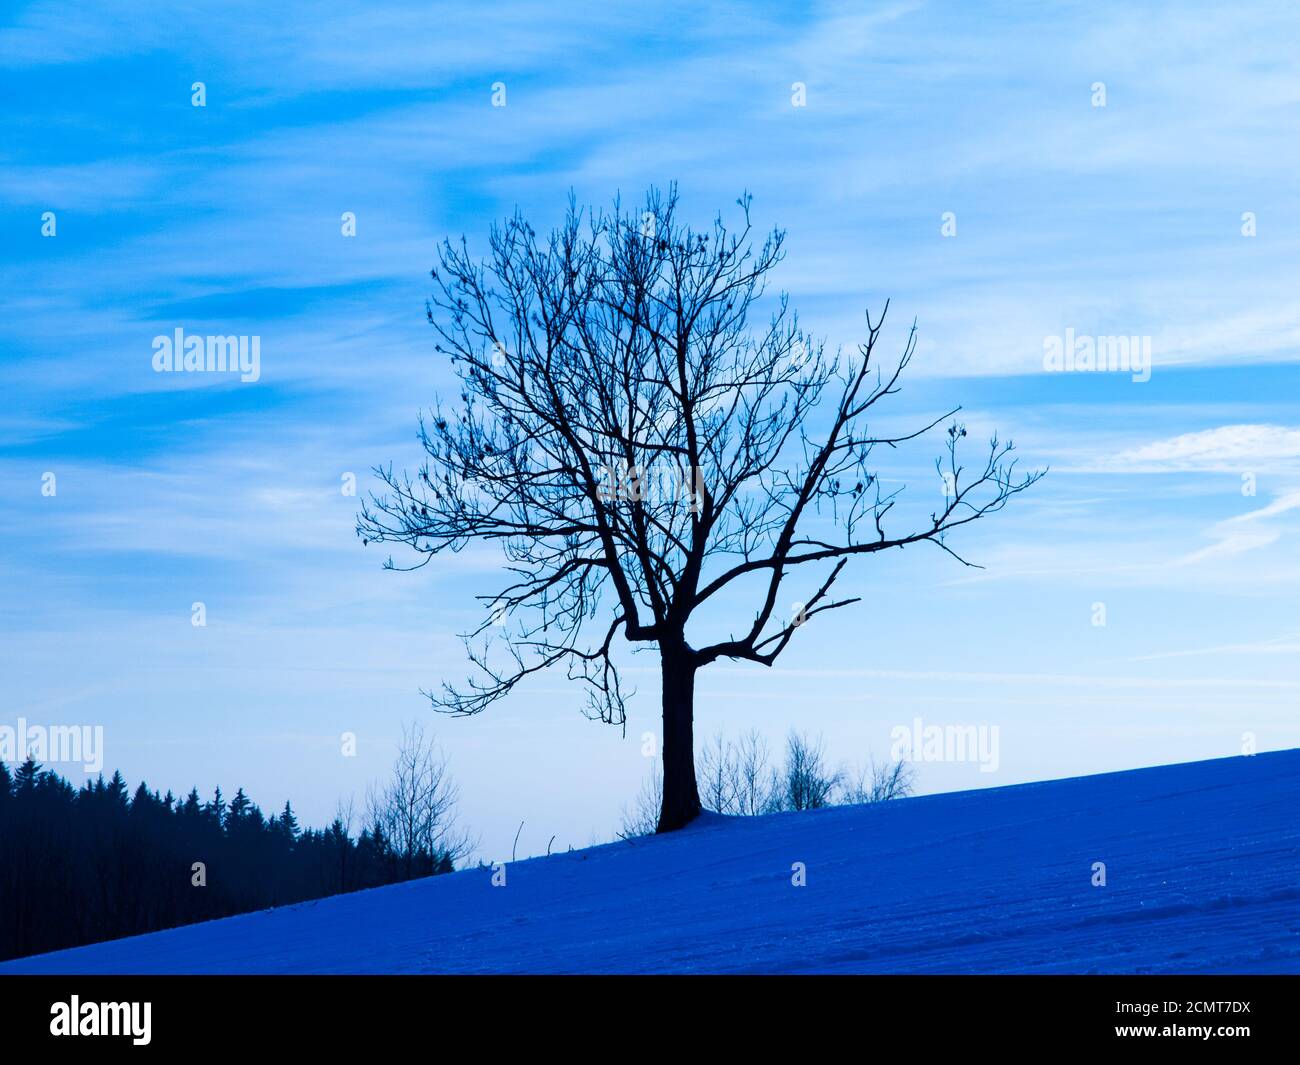 Tree silhouette in winter evening, blue tone, cold temperature Stock Photo